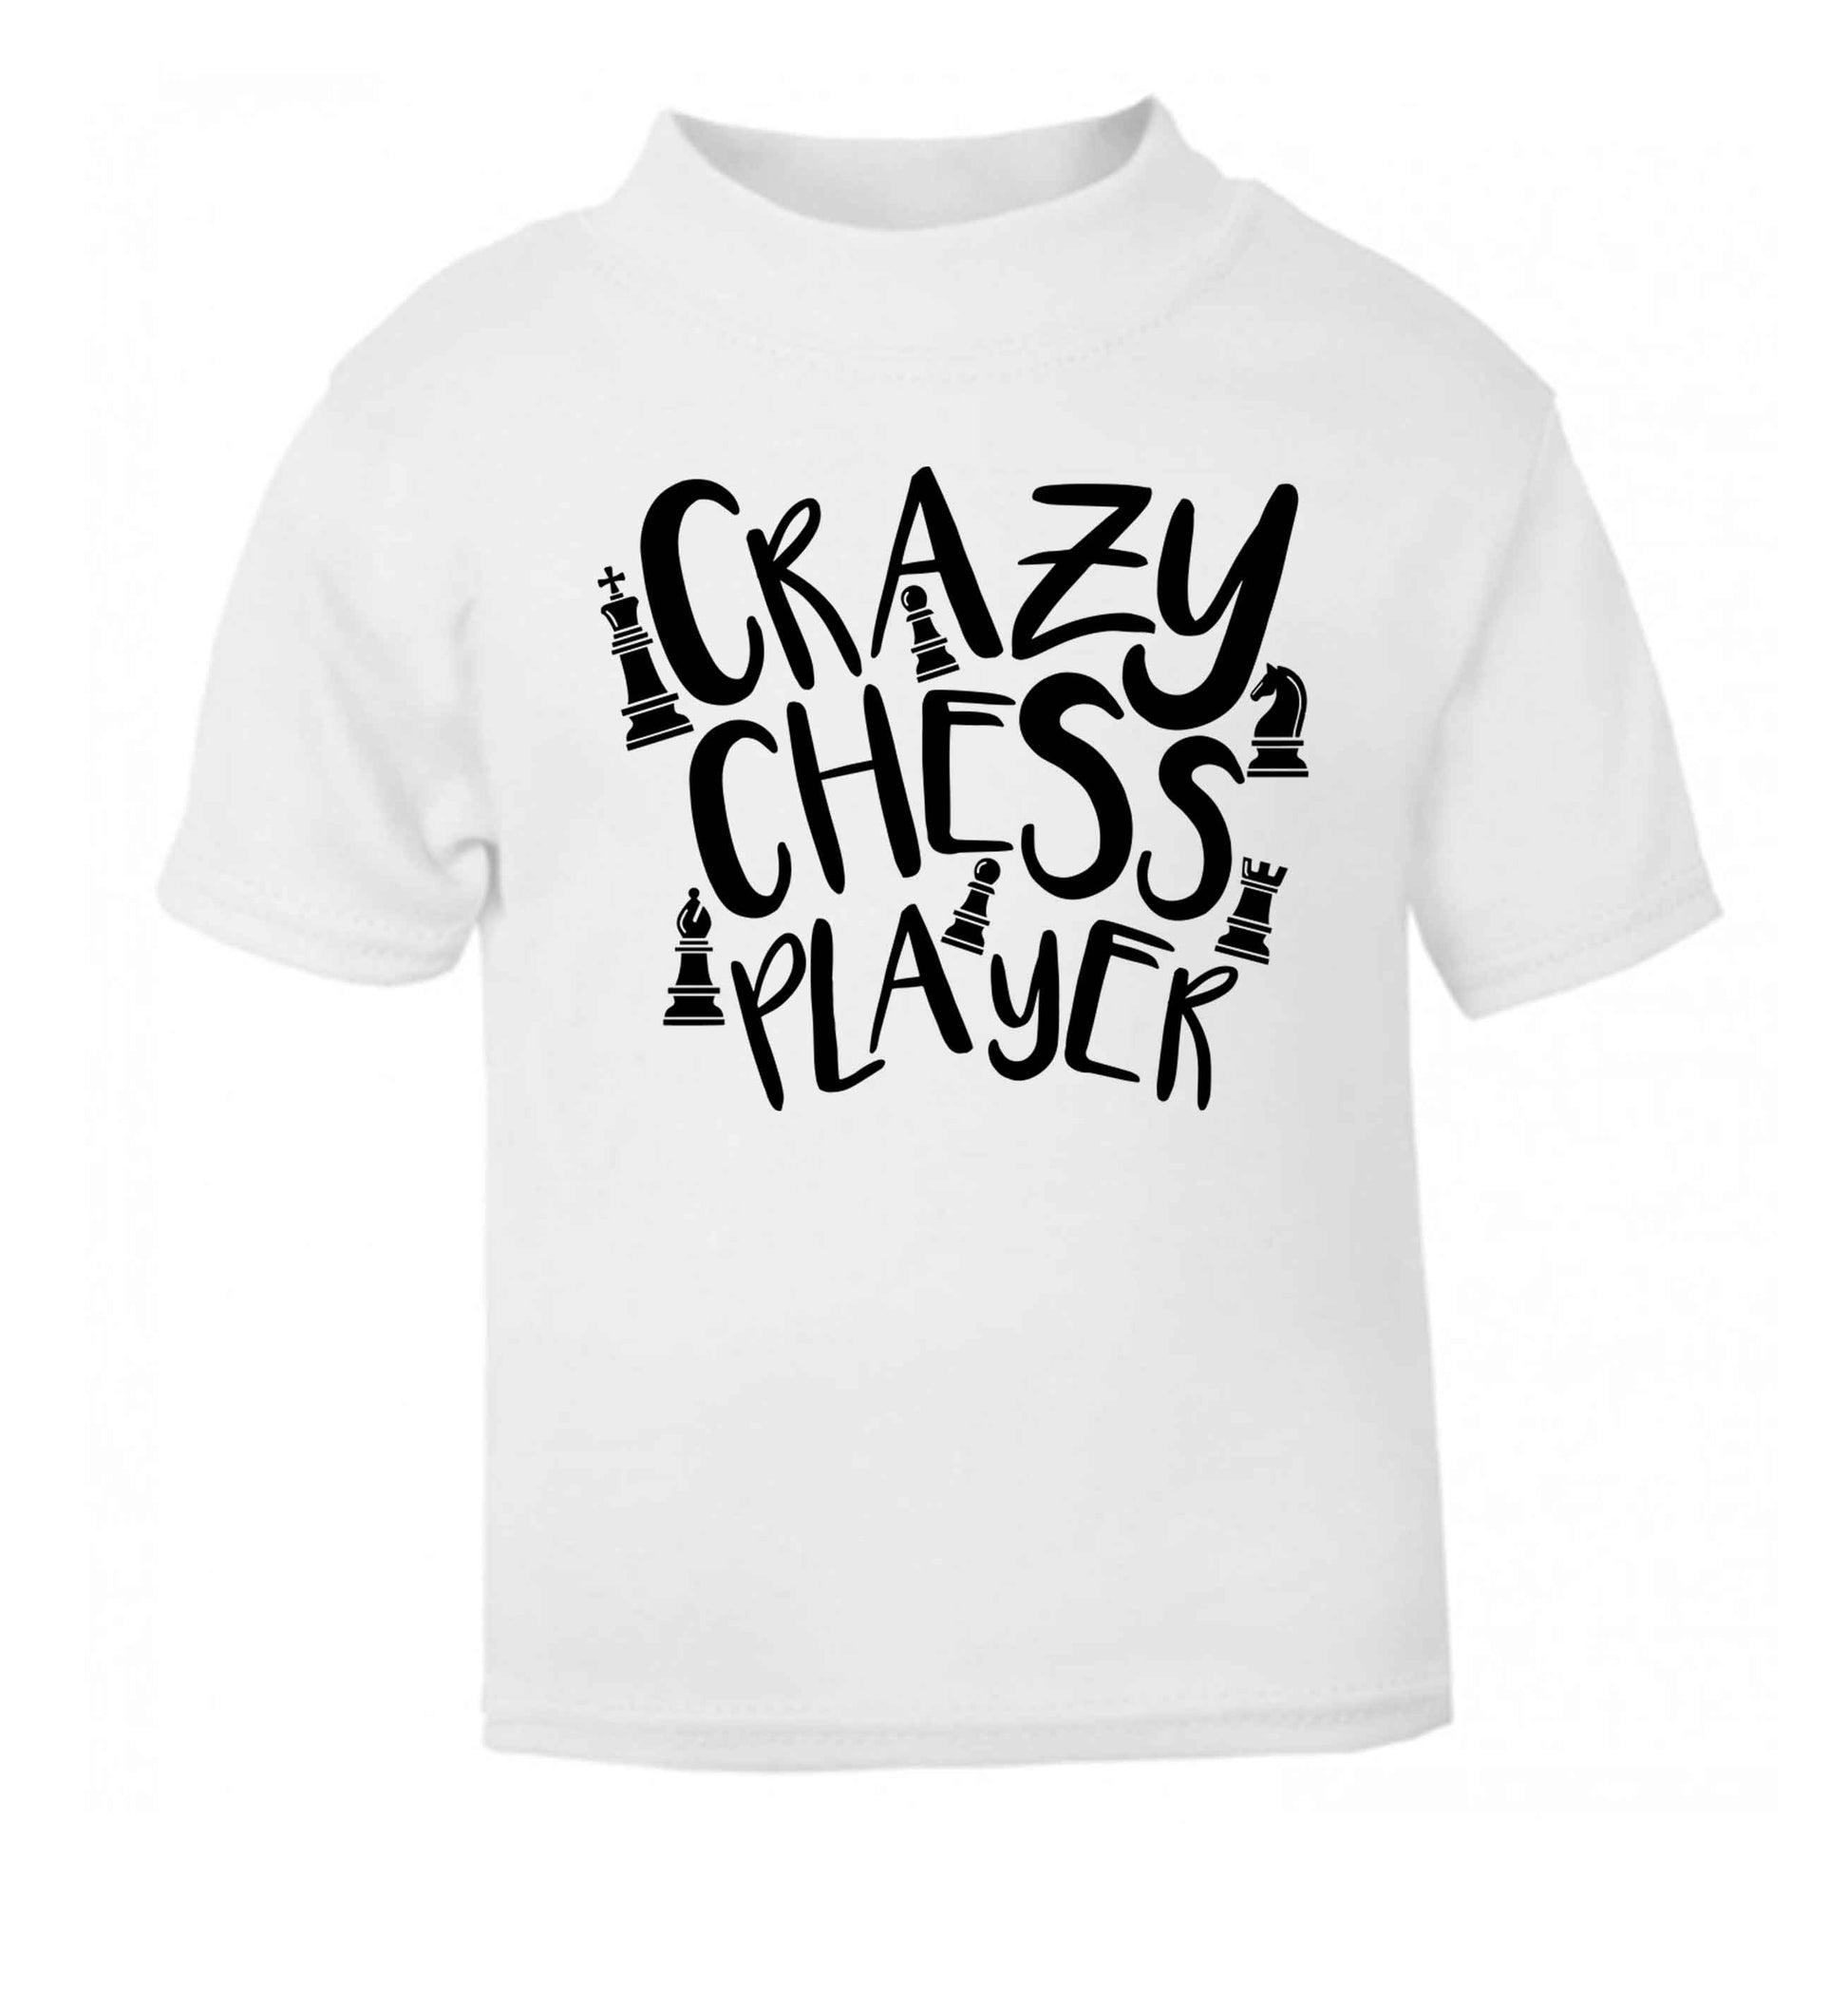 Crazy chess player white Baby Toddler Tshirt 2 Years